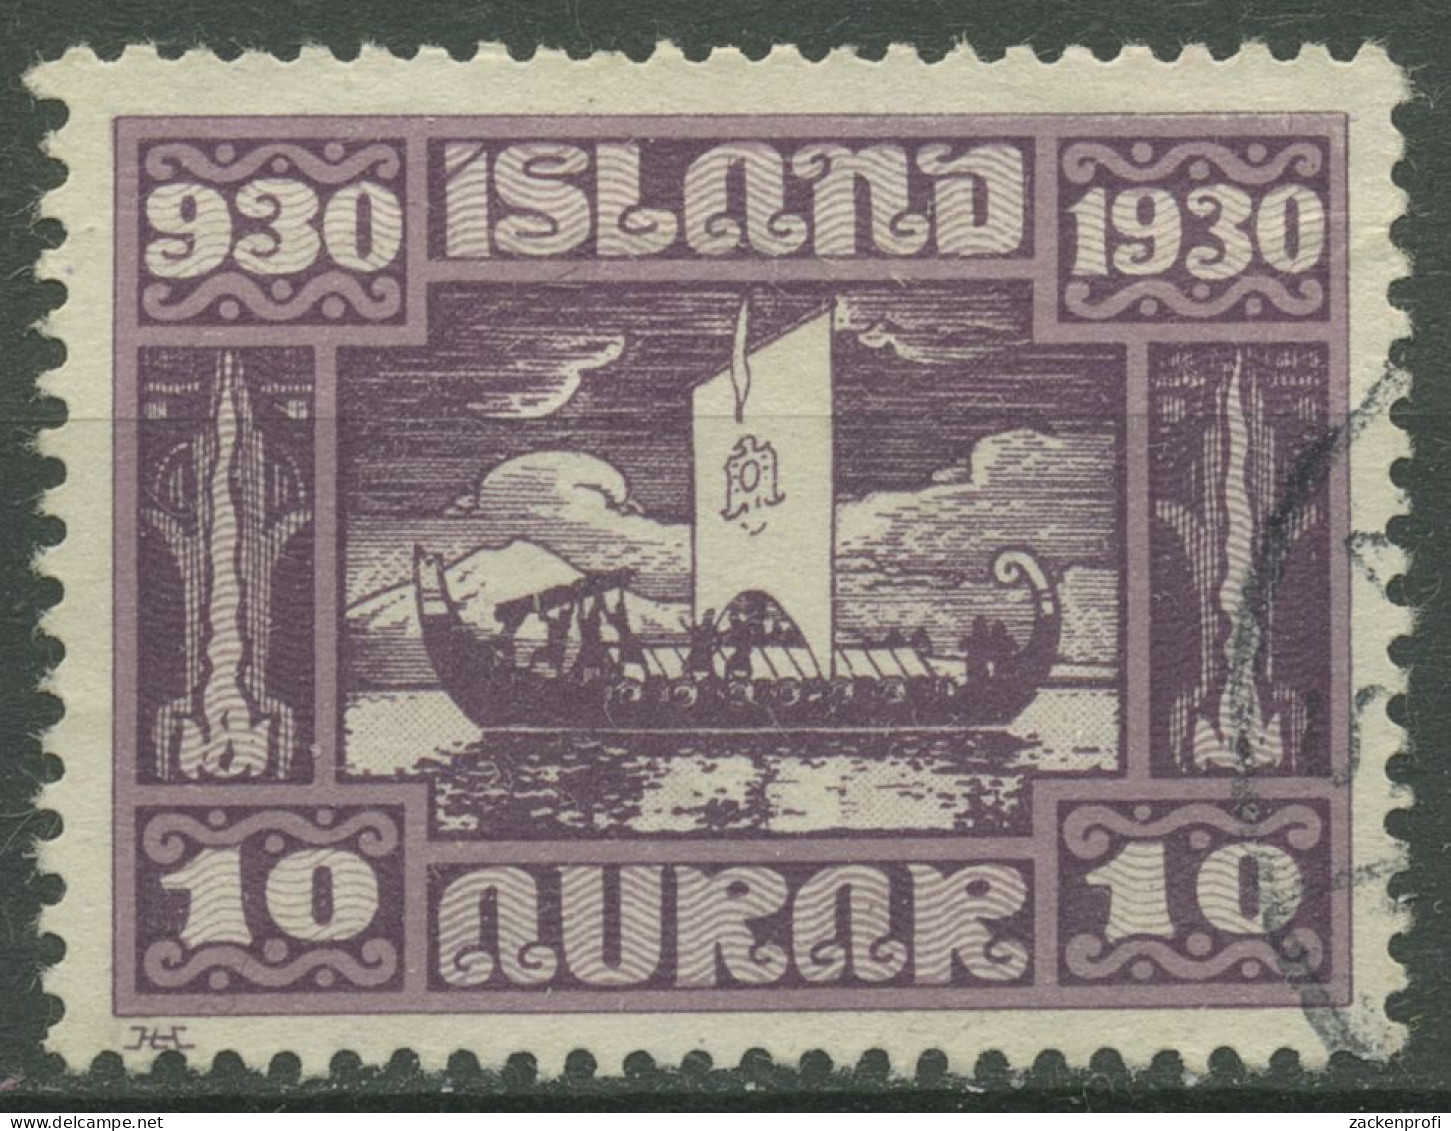 Island 1930 1000 Jahre Allthing Segelboot 128 Gestempelt - Used Stamps